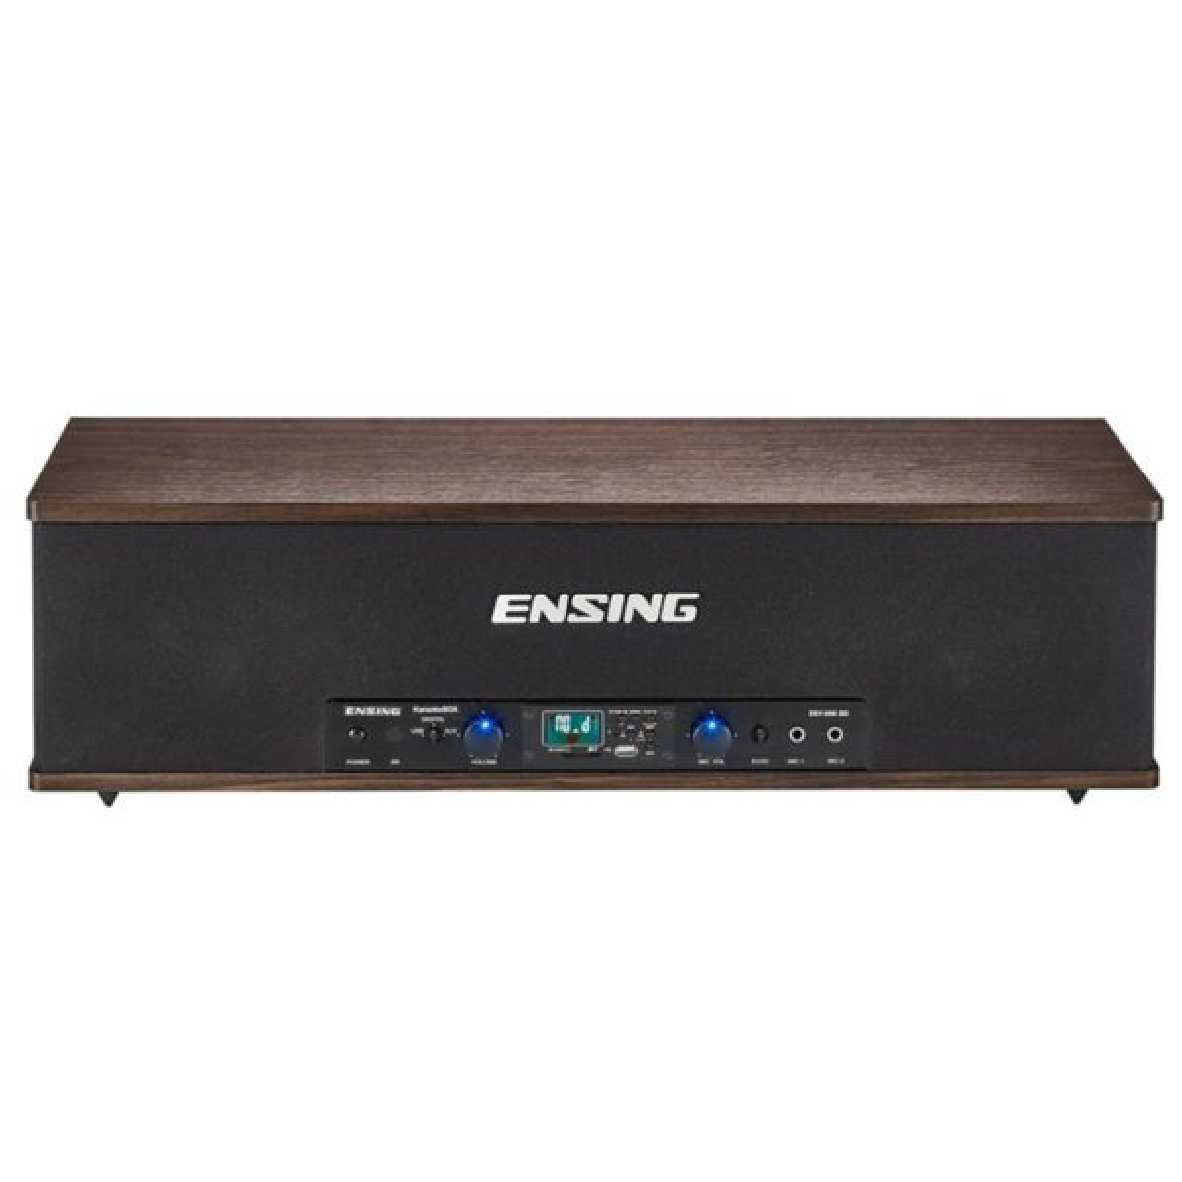 ENSING 燕聲 ESY-500SB 藍芽+MP3+FM 頂級 卡拉OK 音響 擴音機 喇叭 | 金曲音響